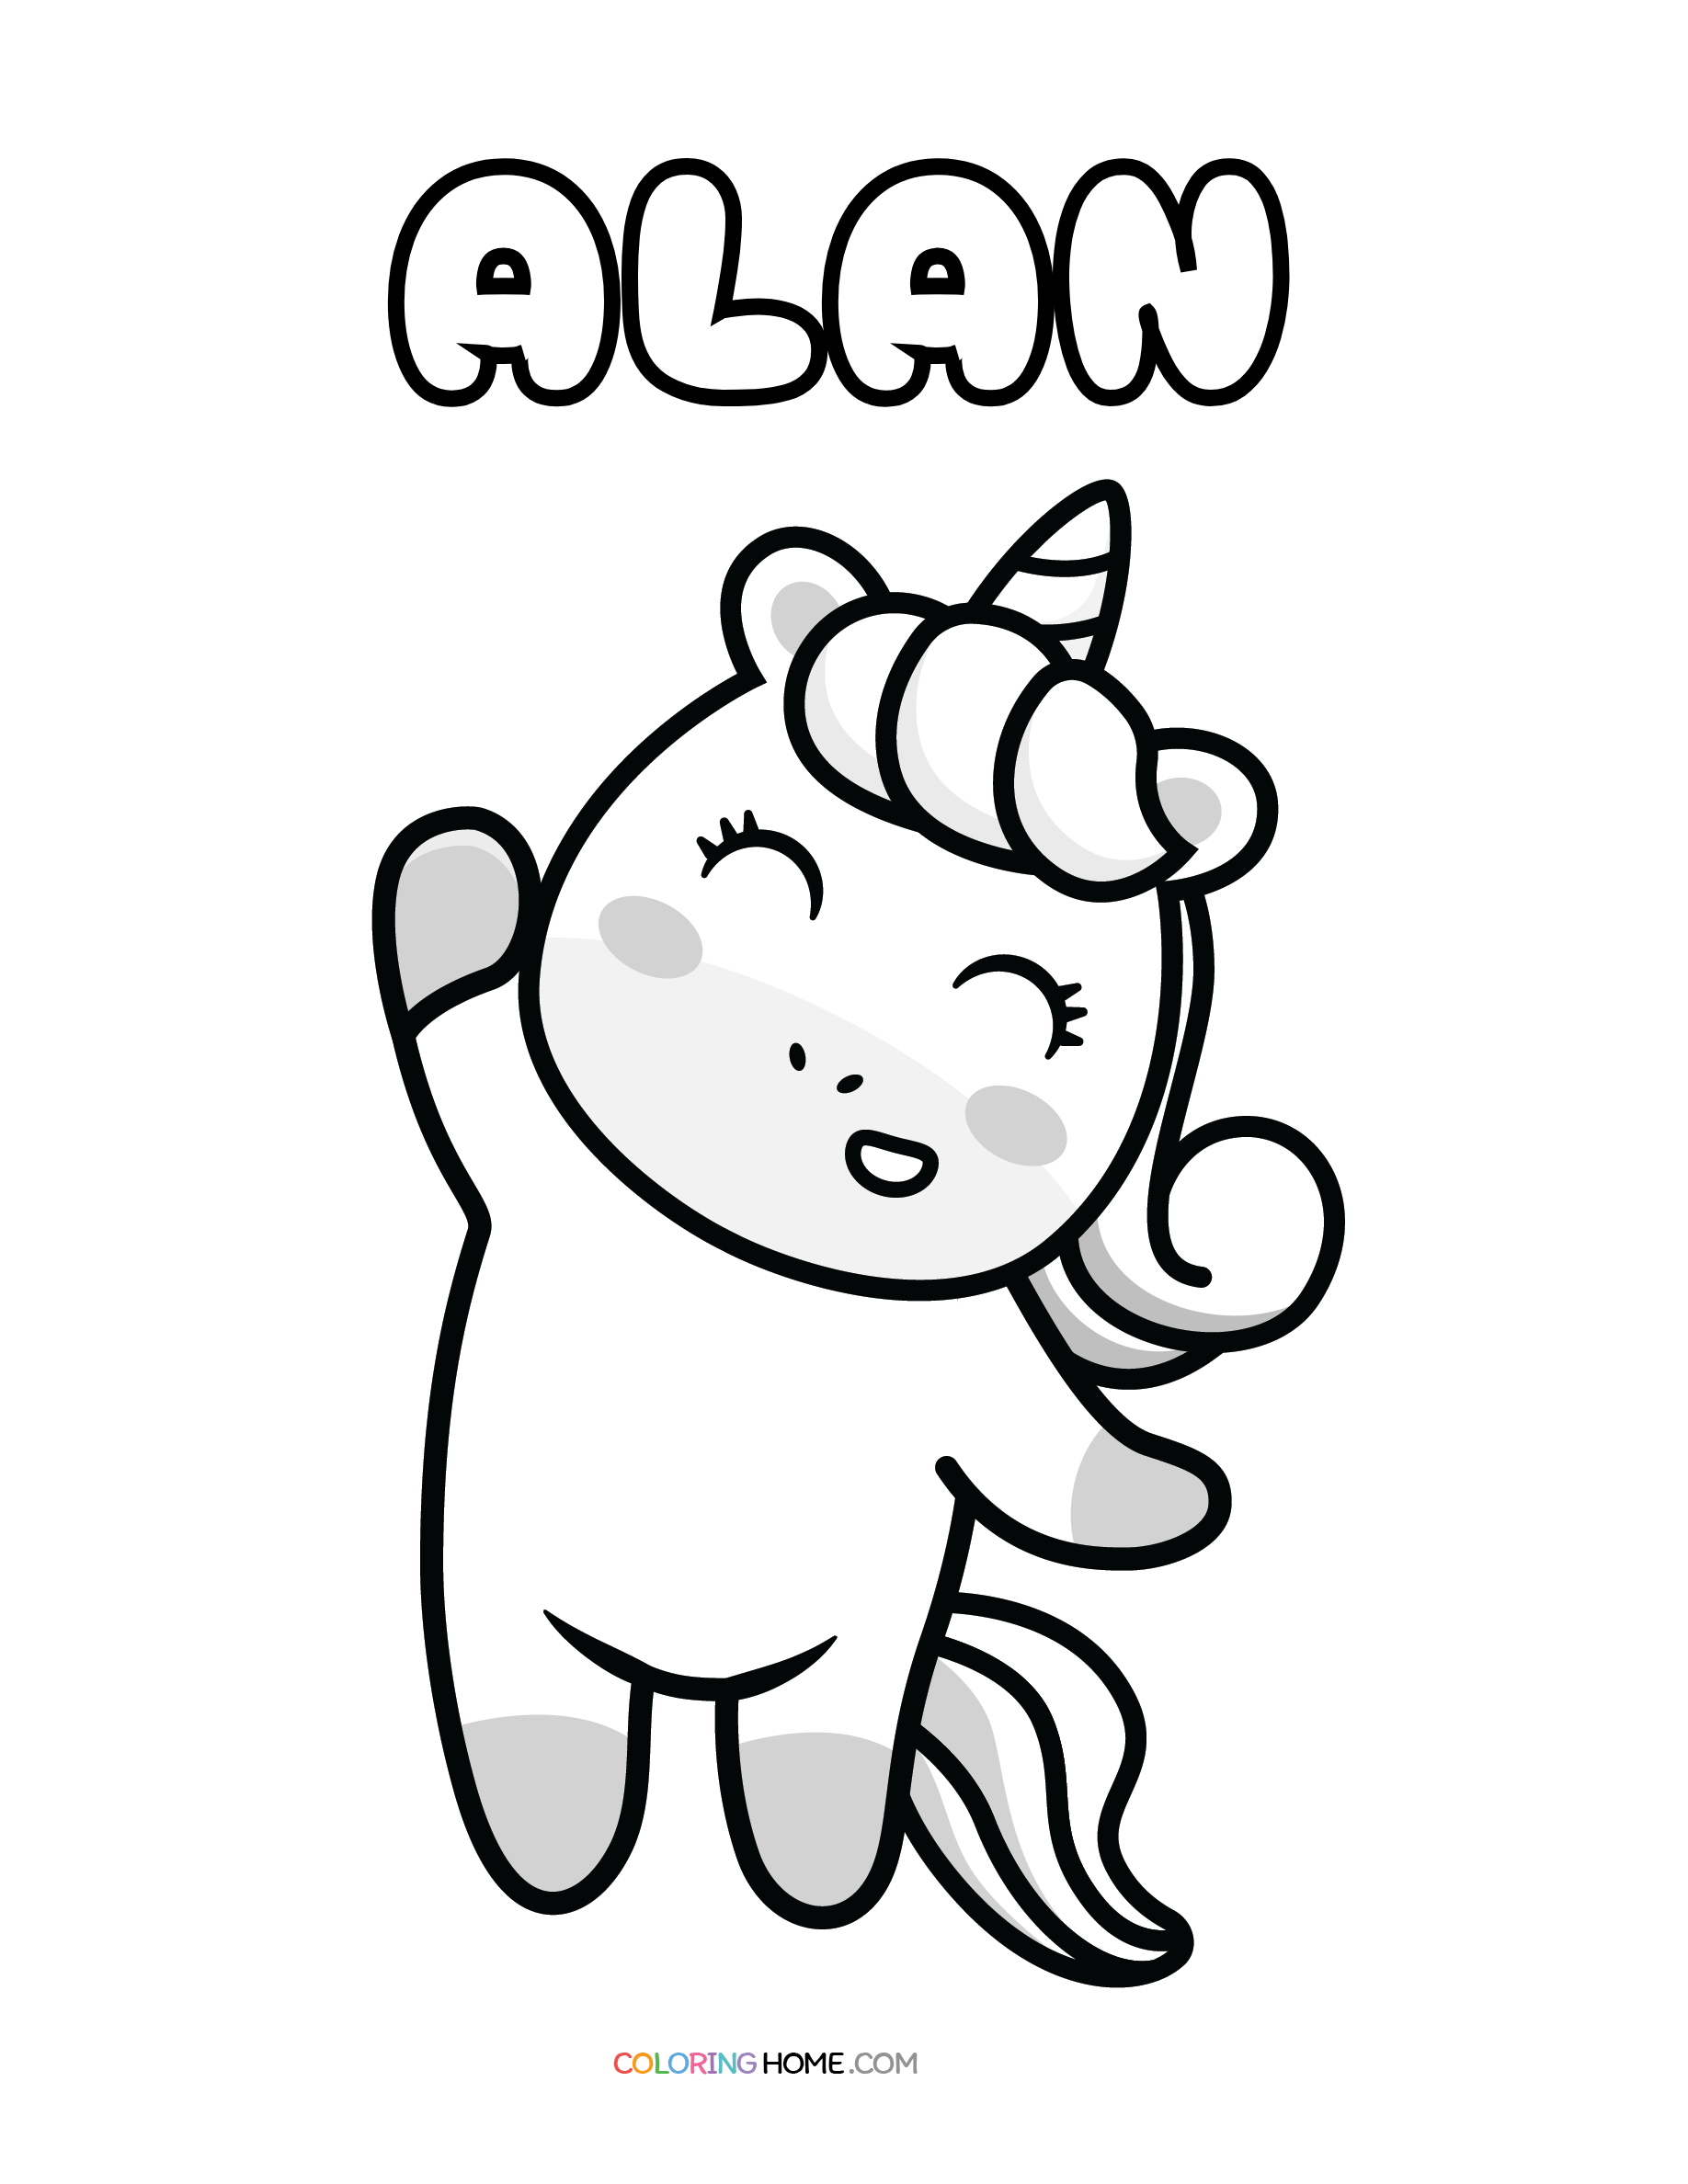 Alan unicorn coloring page